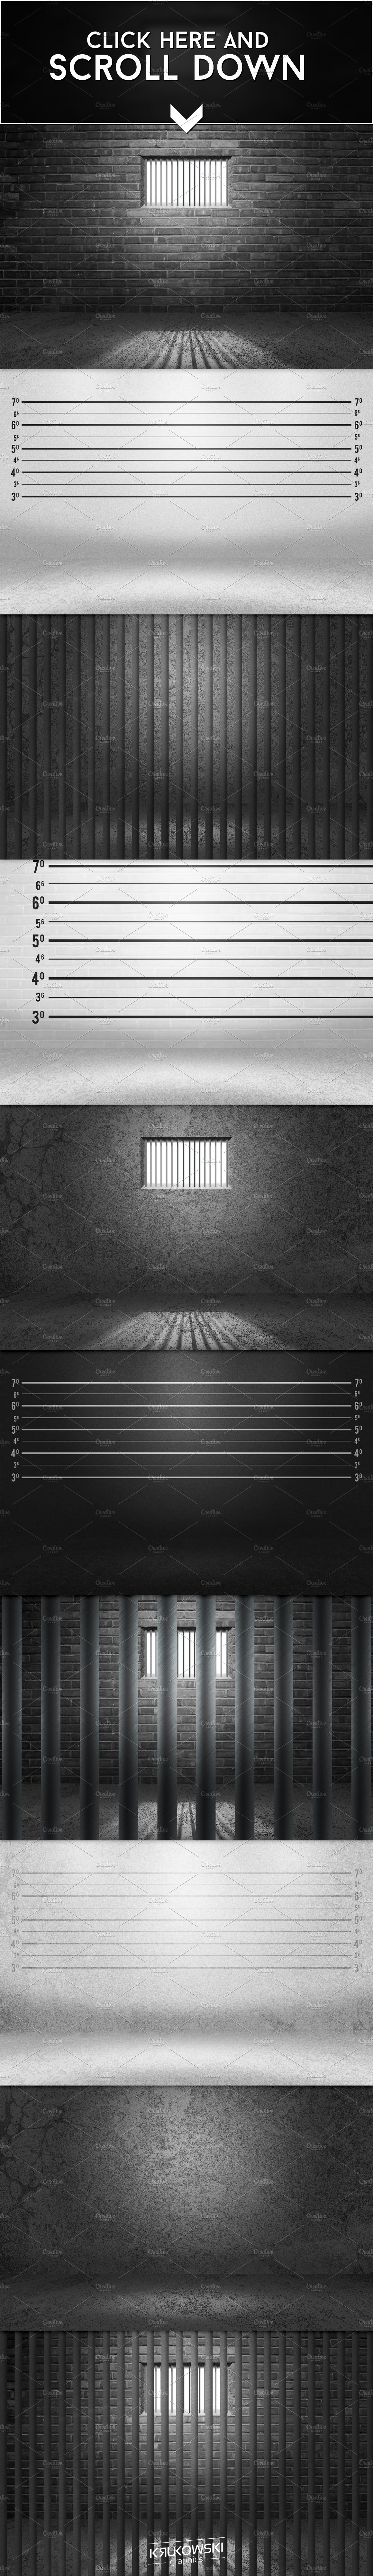 Prison PSD Backdrop preview image.